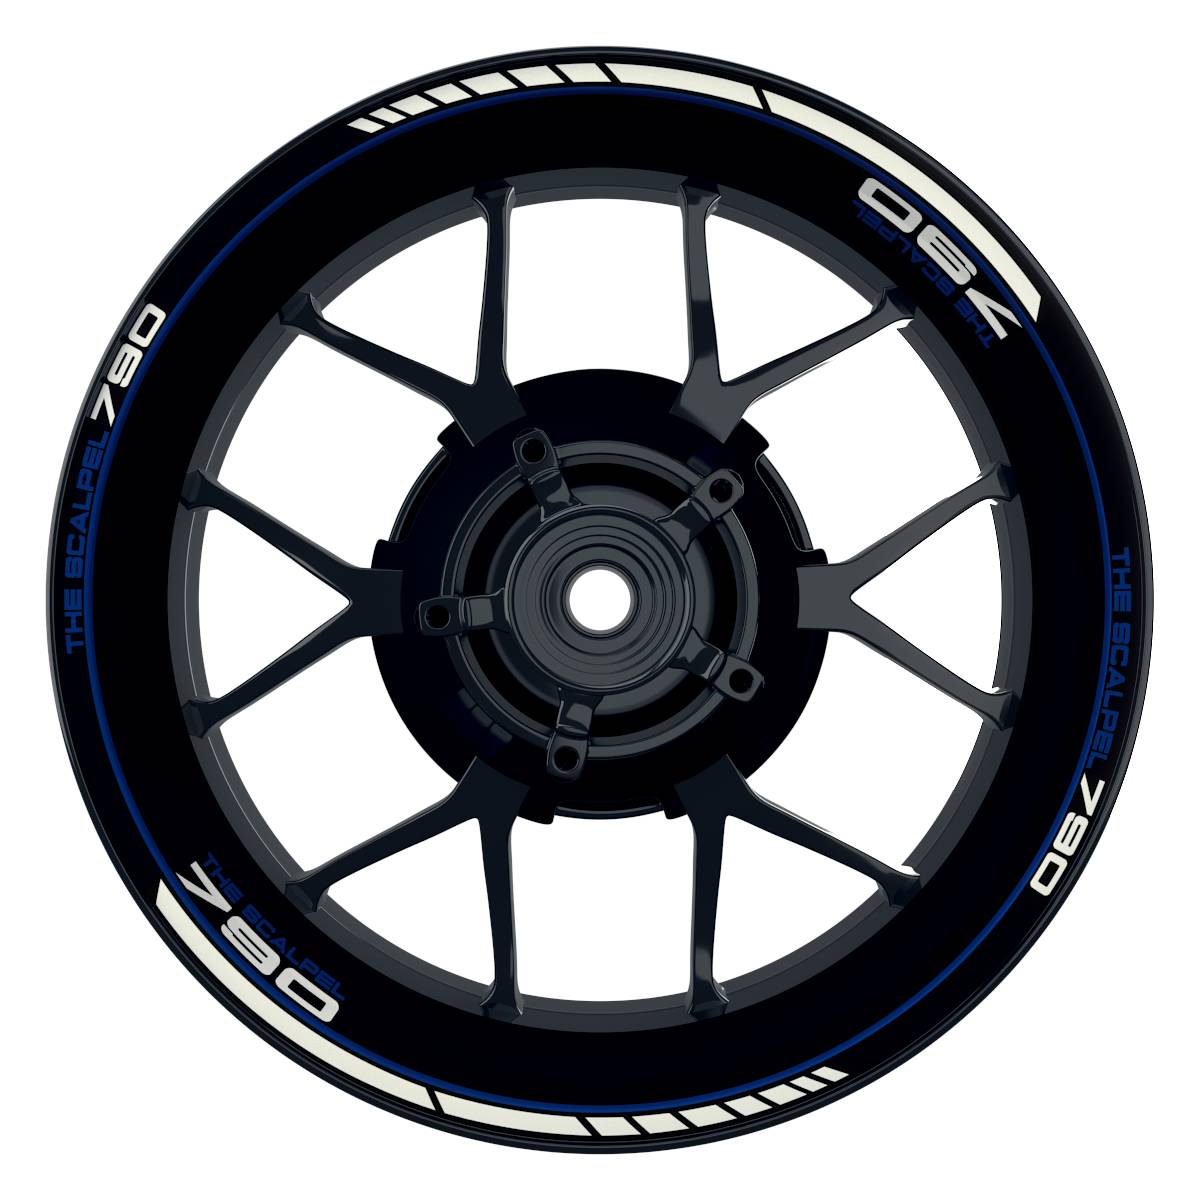 THE SCALPEL 790 Clean schwarz blau Wheelsticker Felgenaufkleber